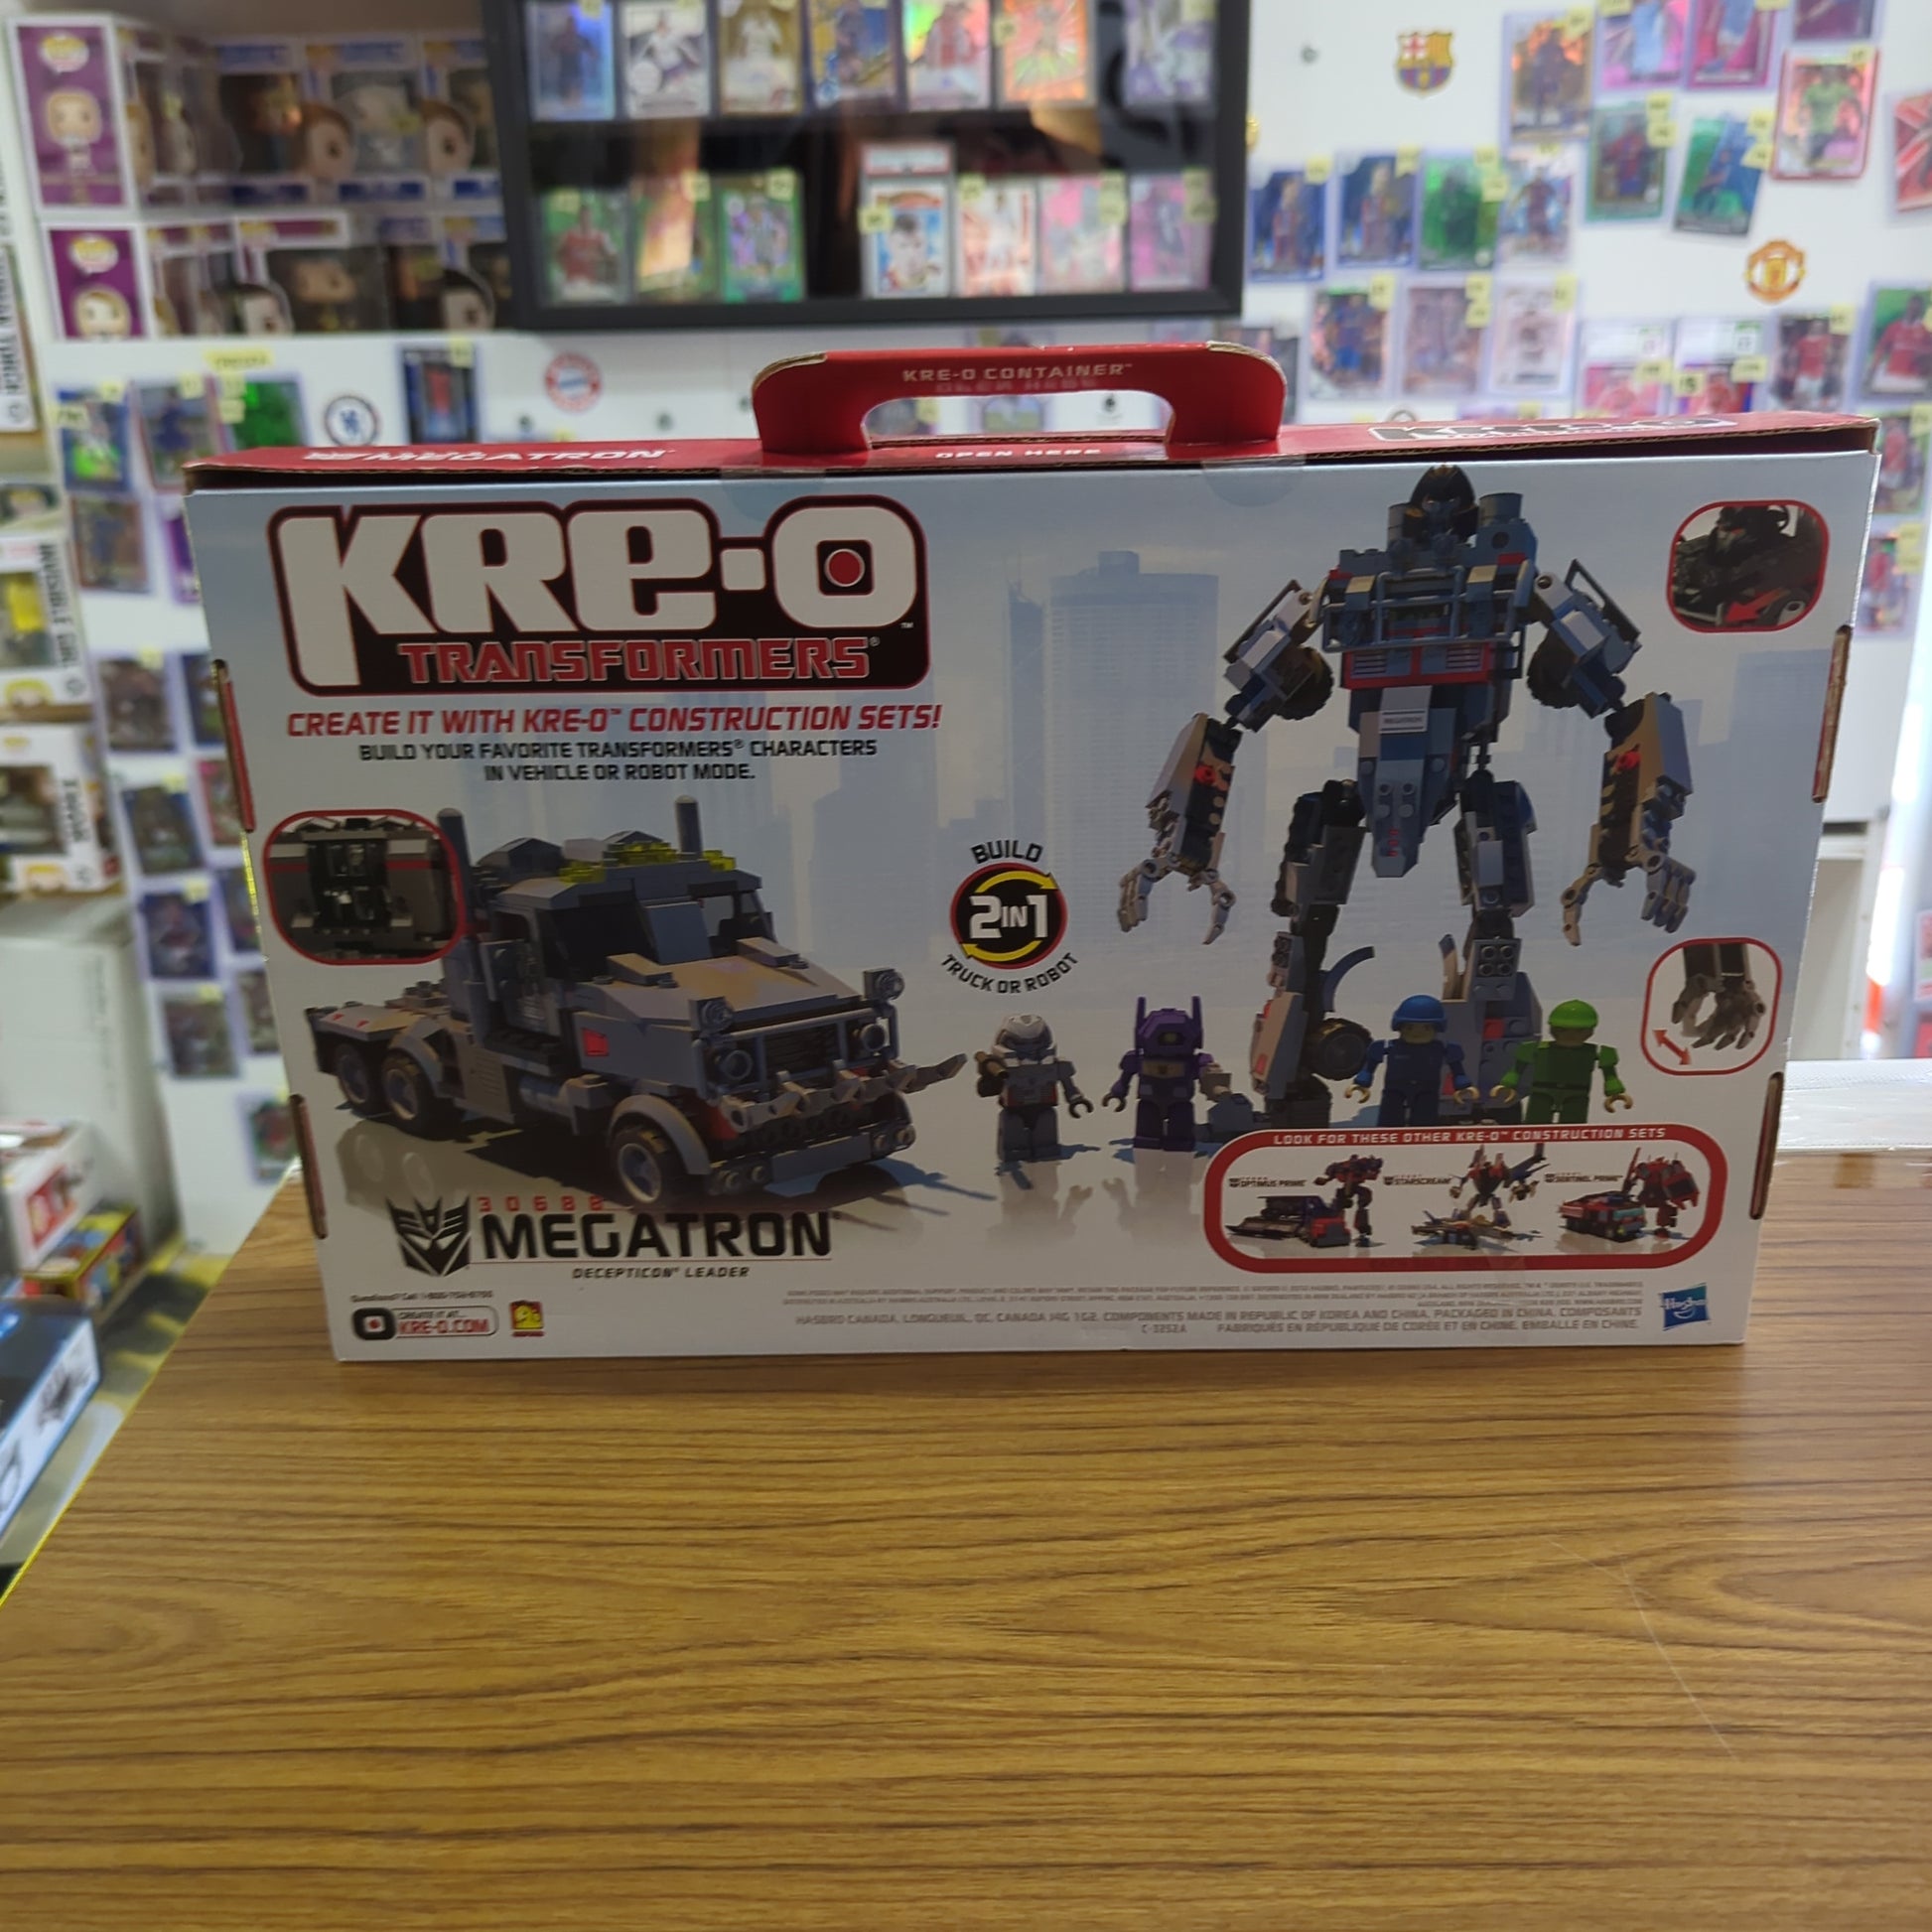 KRE-O Transformers - Megatron 30688 - 4 Kreons included • Hasbro   NEW FRENLY BRICKS - Open 7 Days